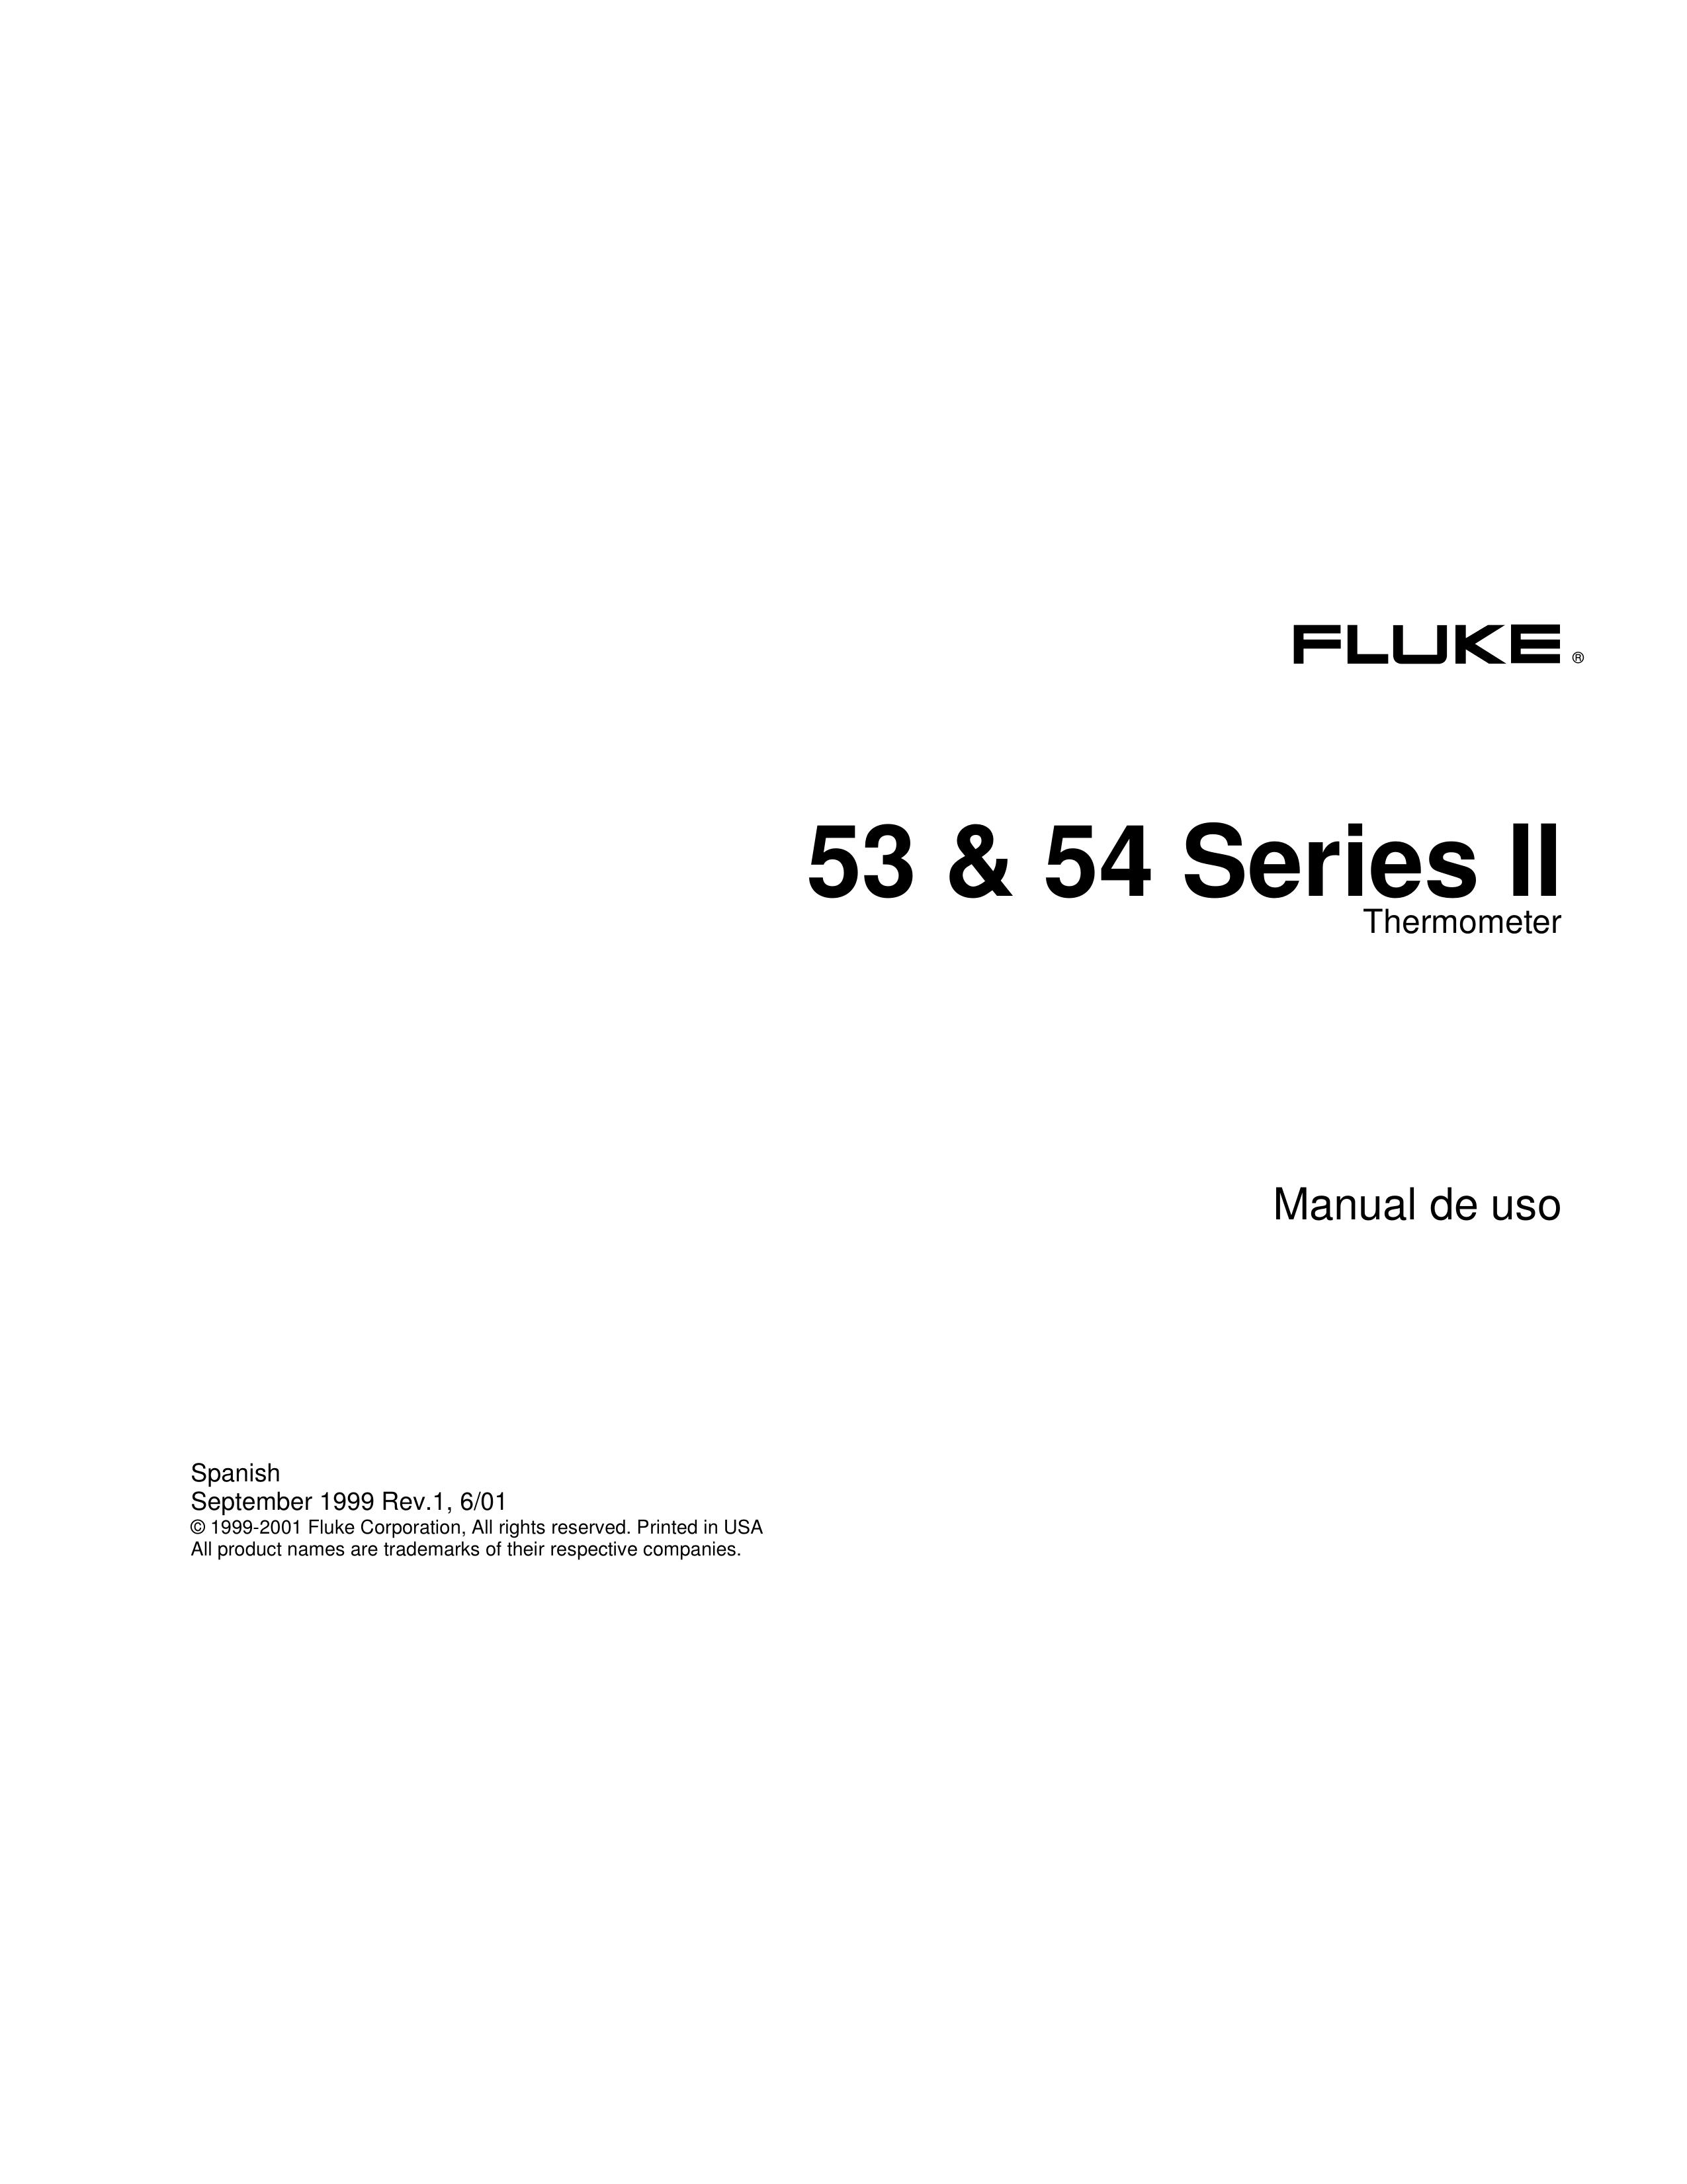 Fluke 53 Series Thermometer User Manual